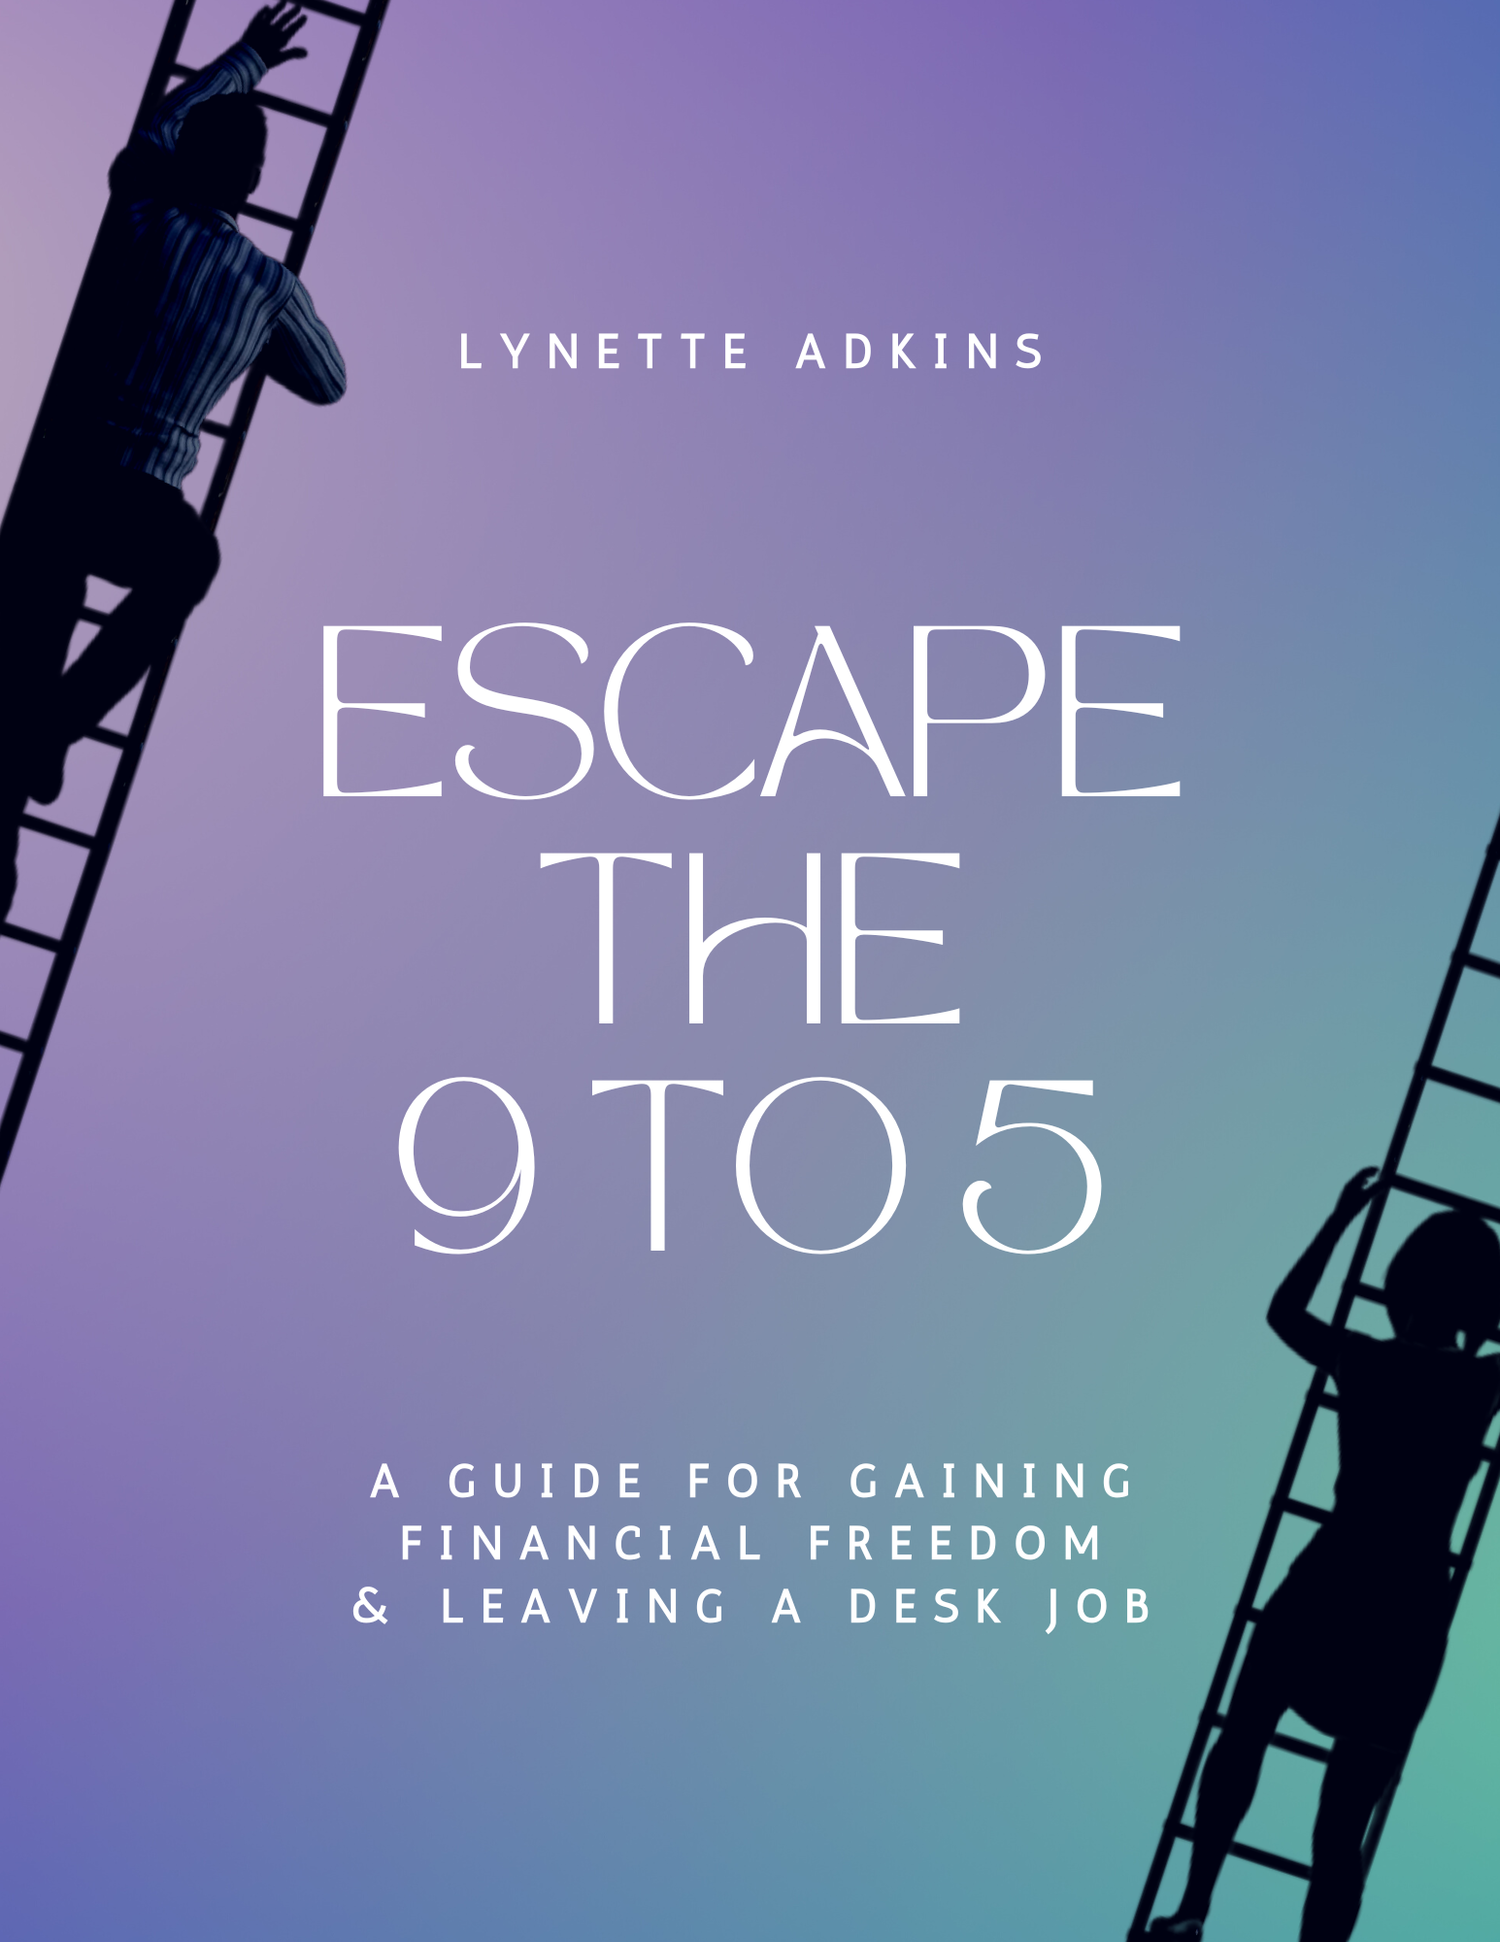 escape the 9 to 5 guide — lynette adkins